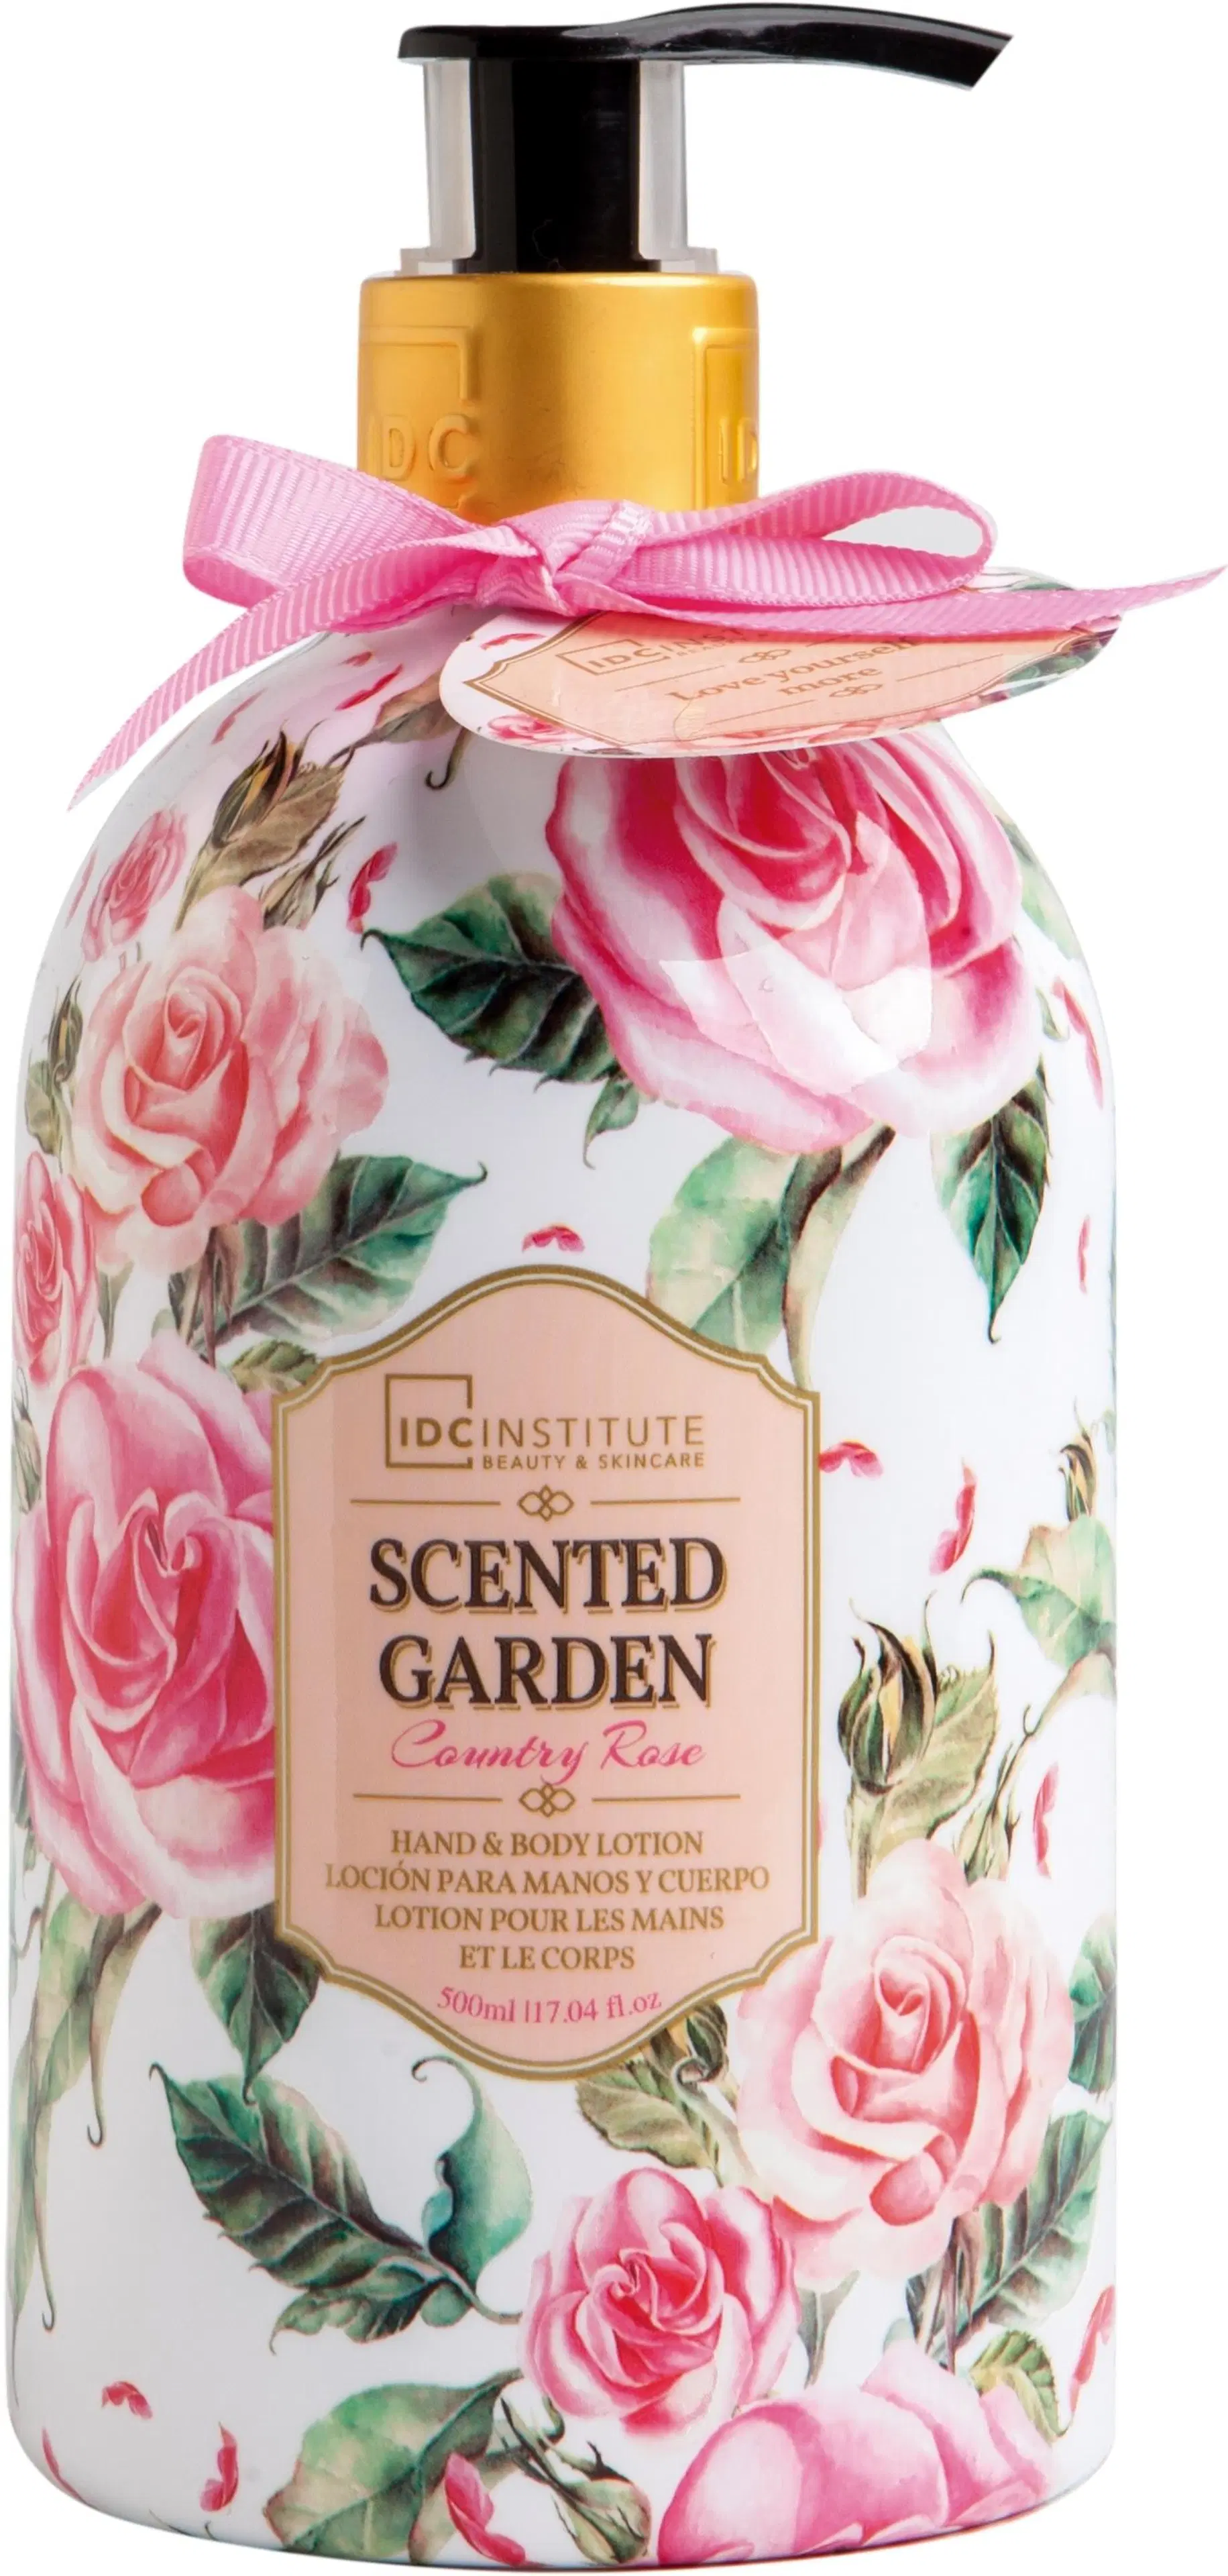 IDC INSTITUTE Hand & Body Lotion Country Rose käsi- & vartalovoide 500 ml